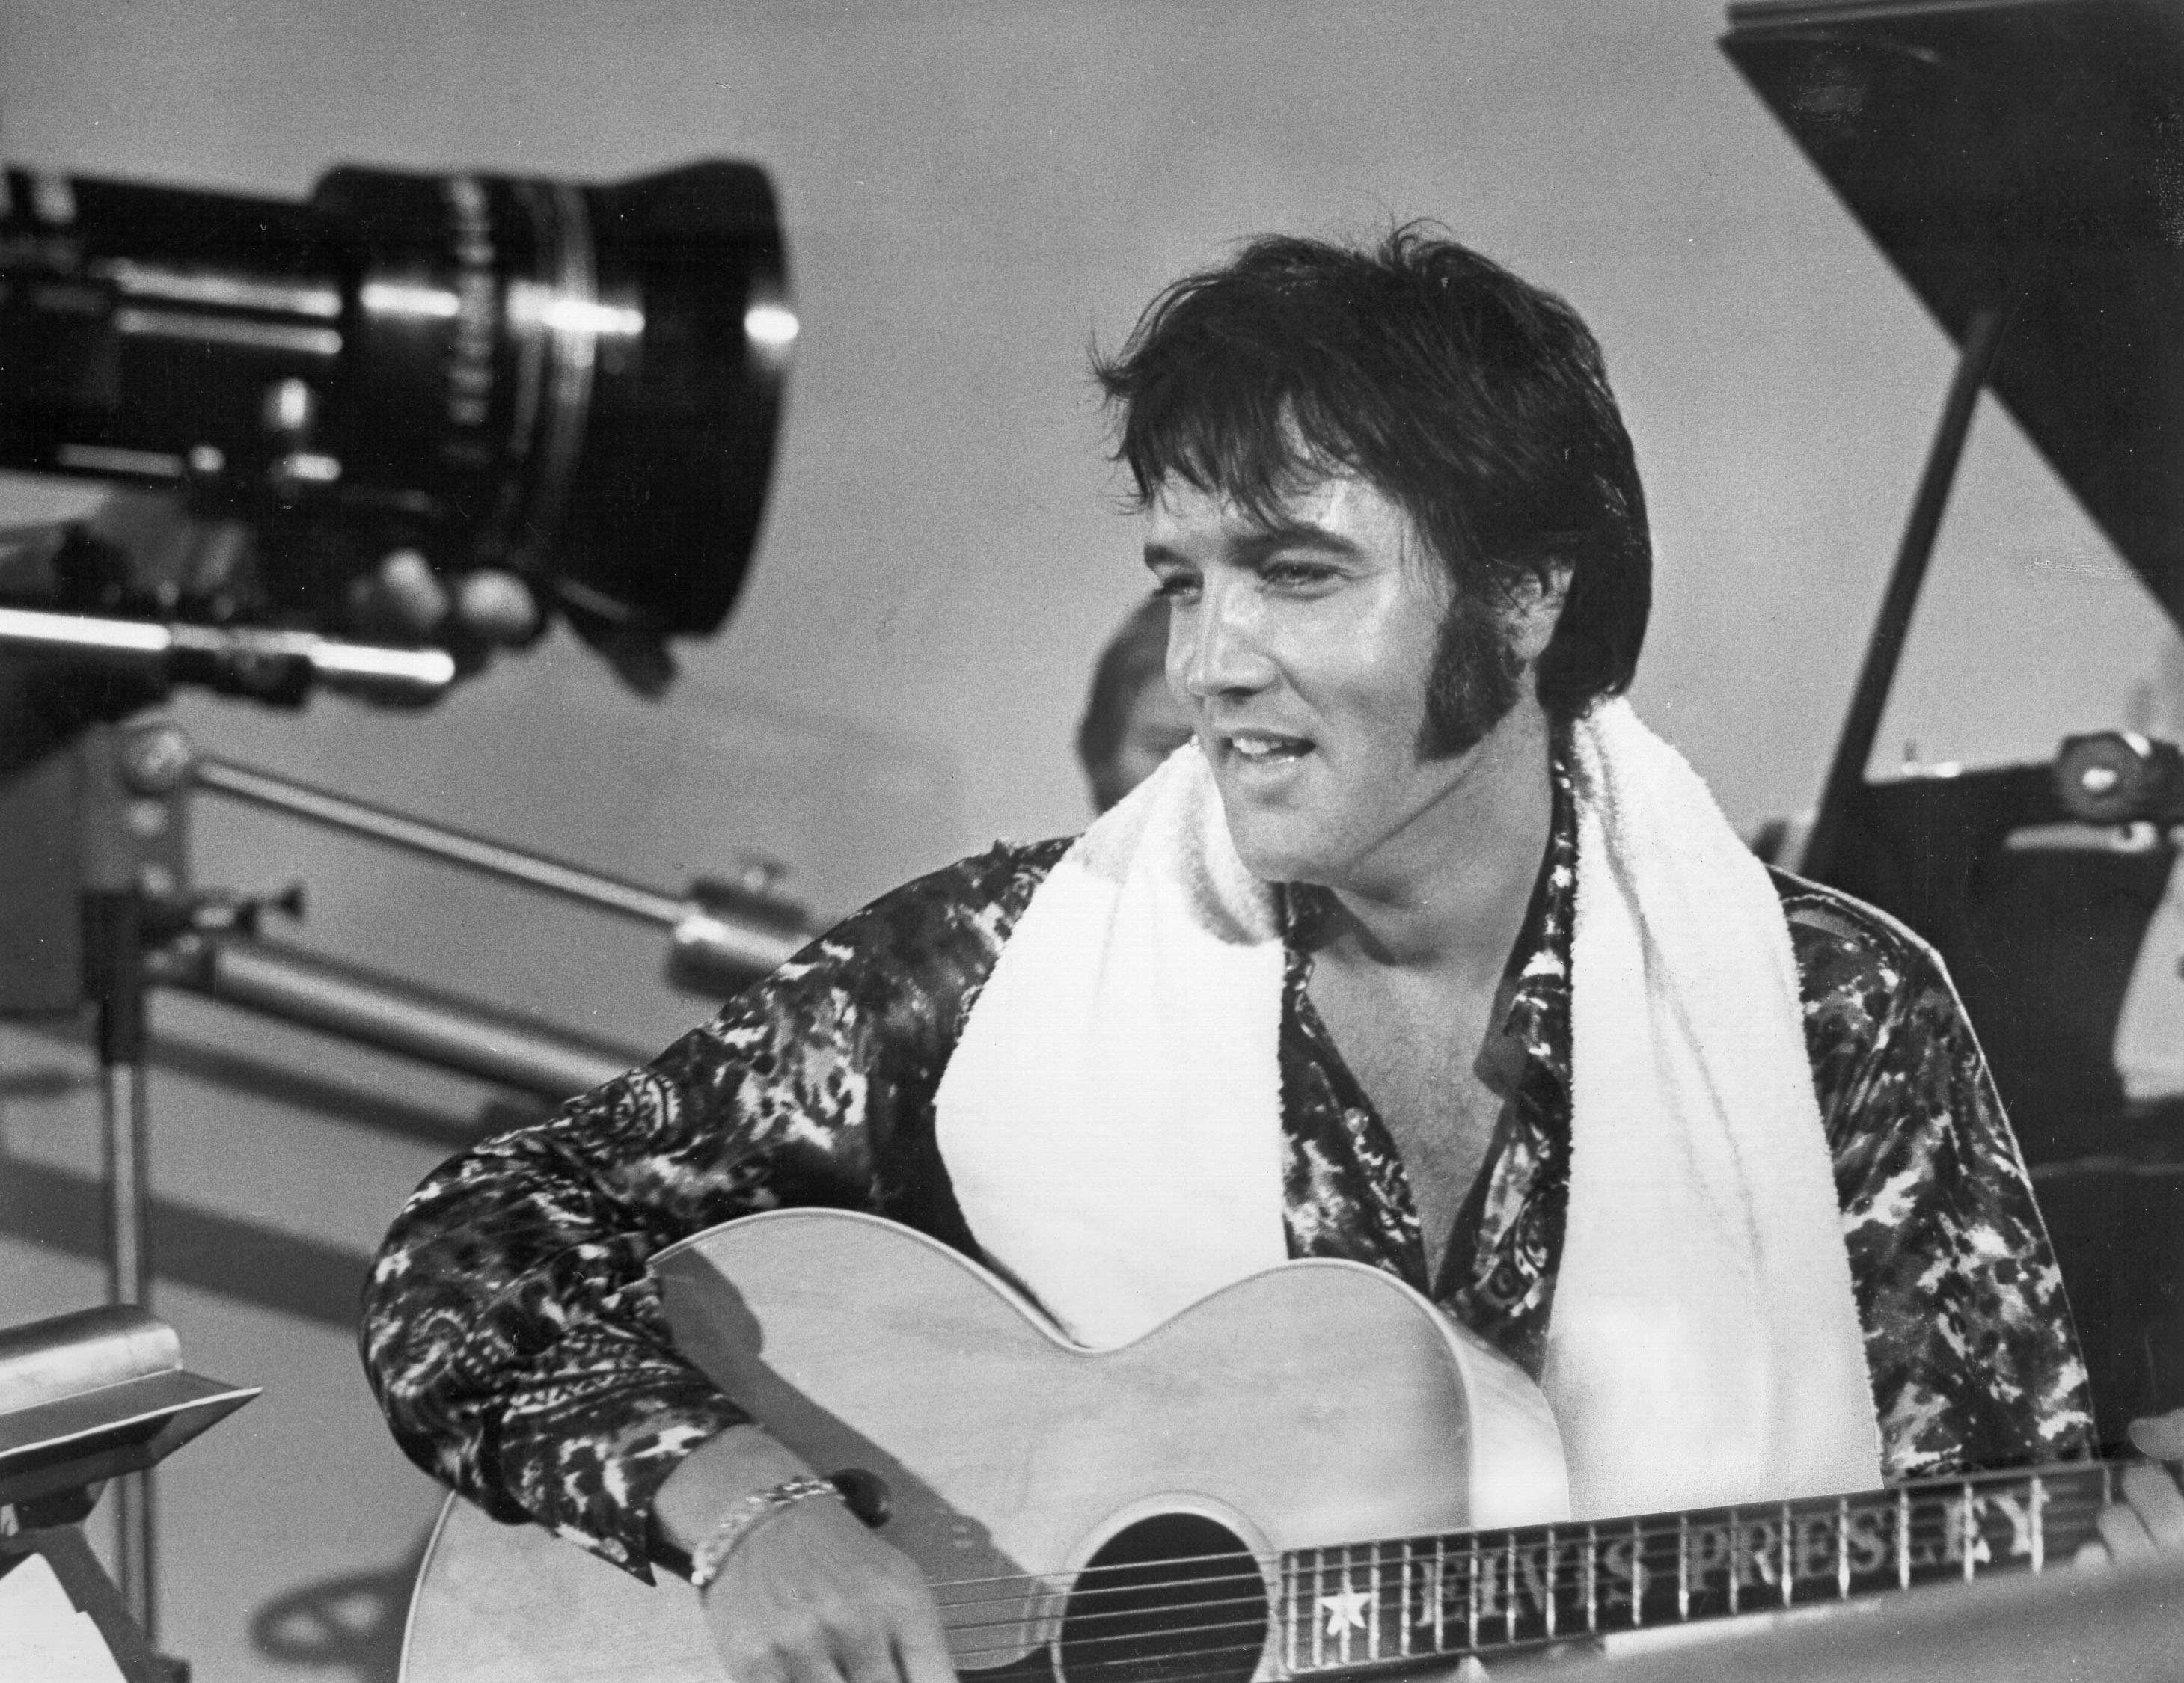 Elvis Presley with a camera